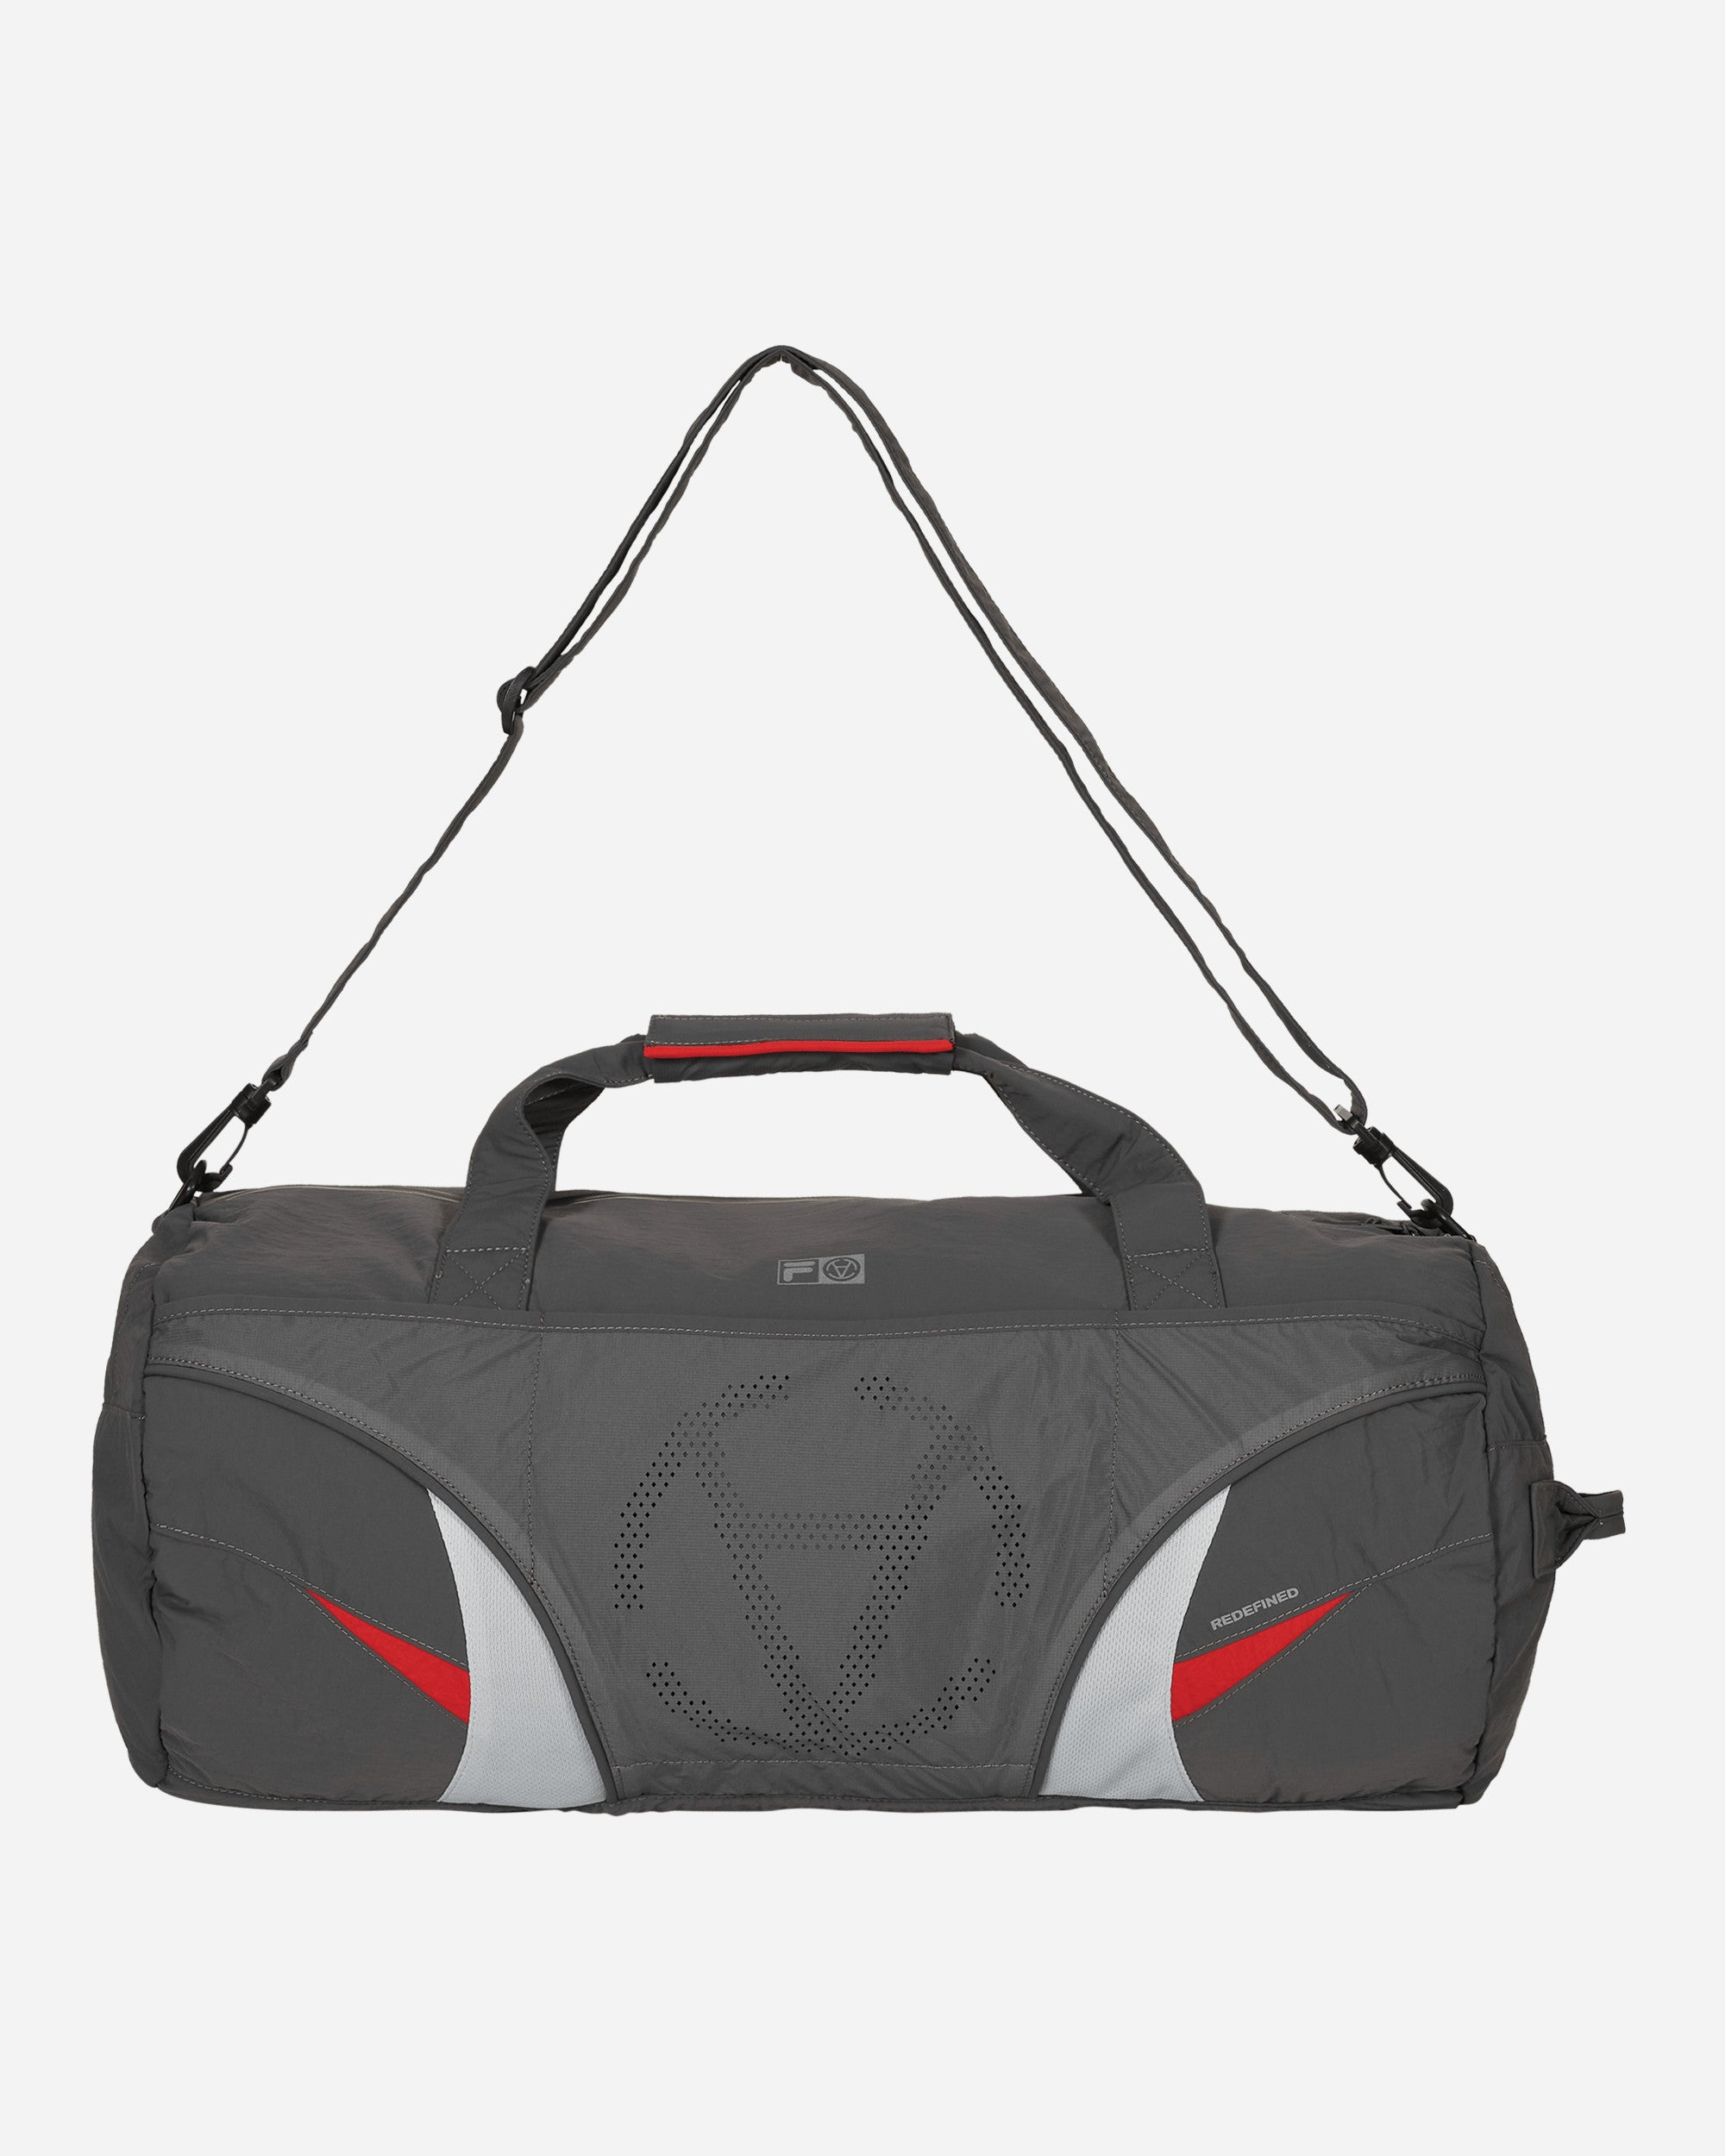 Slam Jam Gym Back Gray Pinstripe Castle Rock Bags and Backpacks Travel bags FBU0068 83100